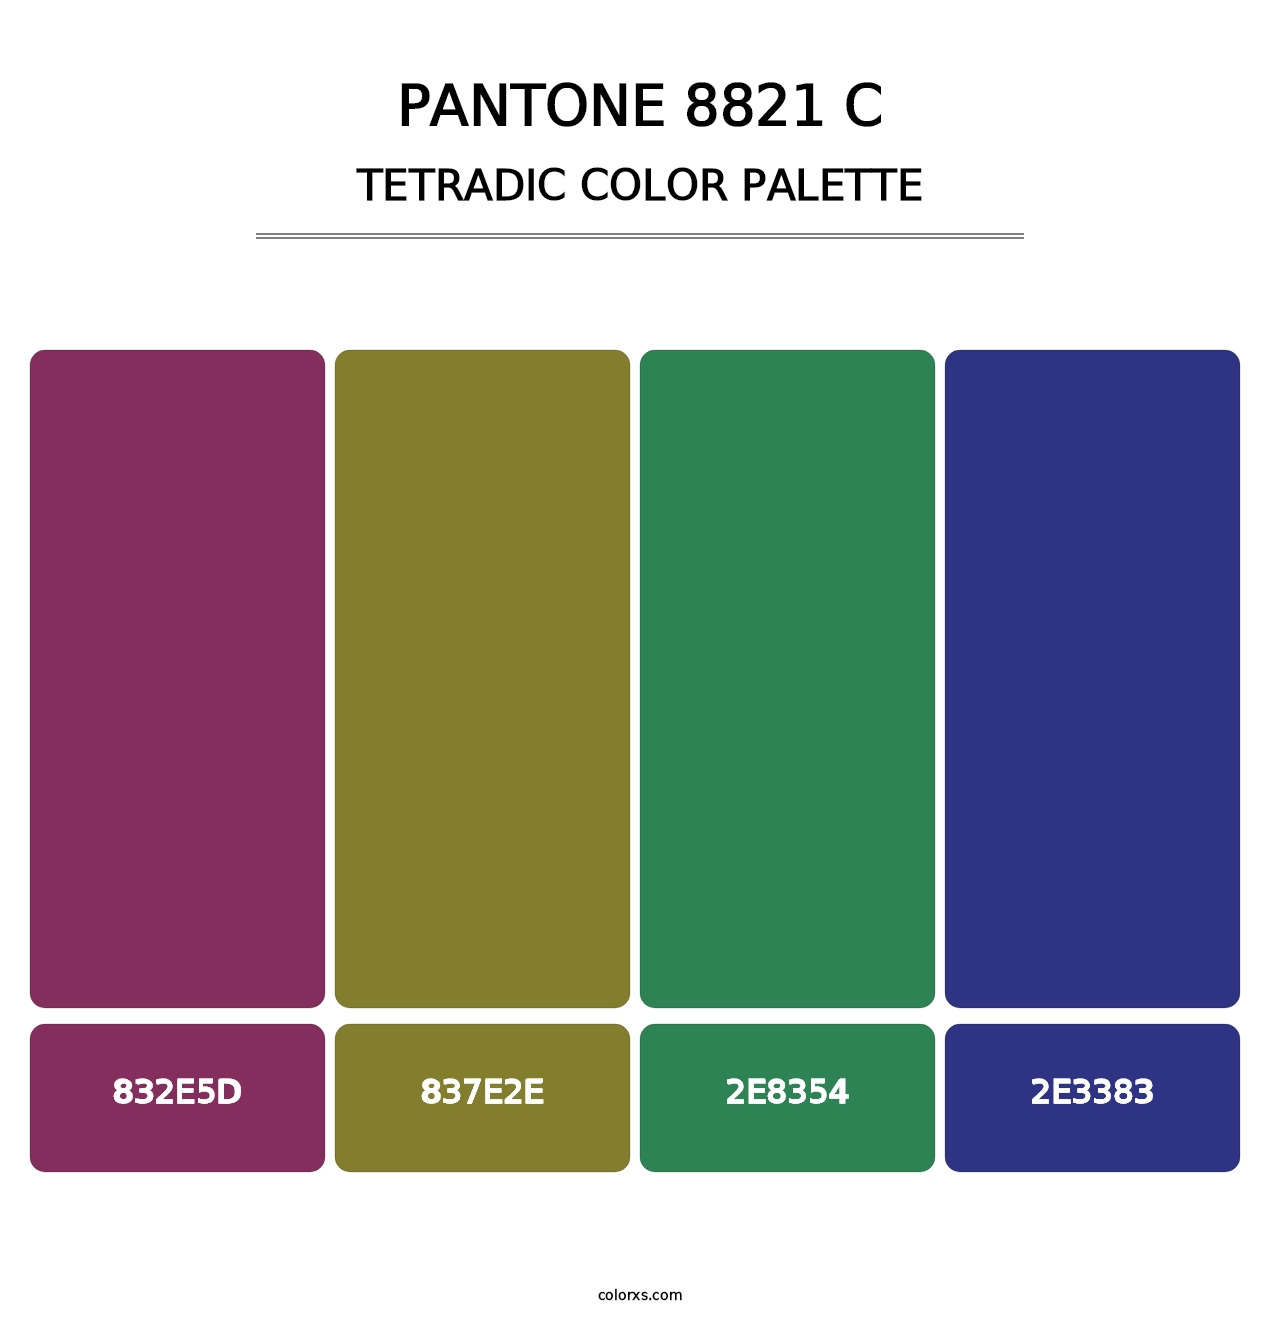 PANTONE 8821 C - Tetradic Color Palette